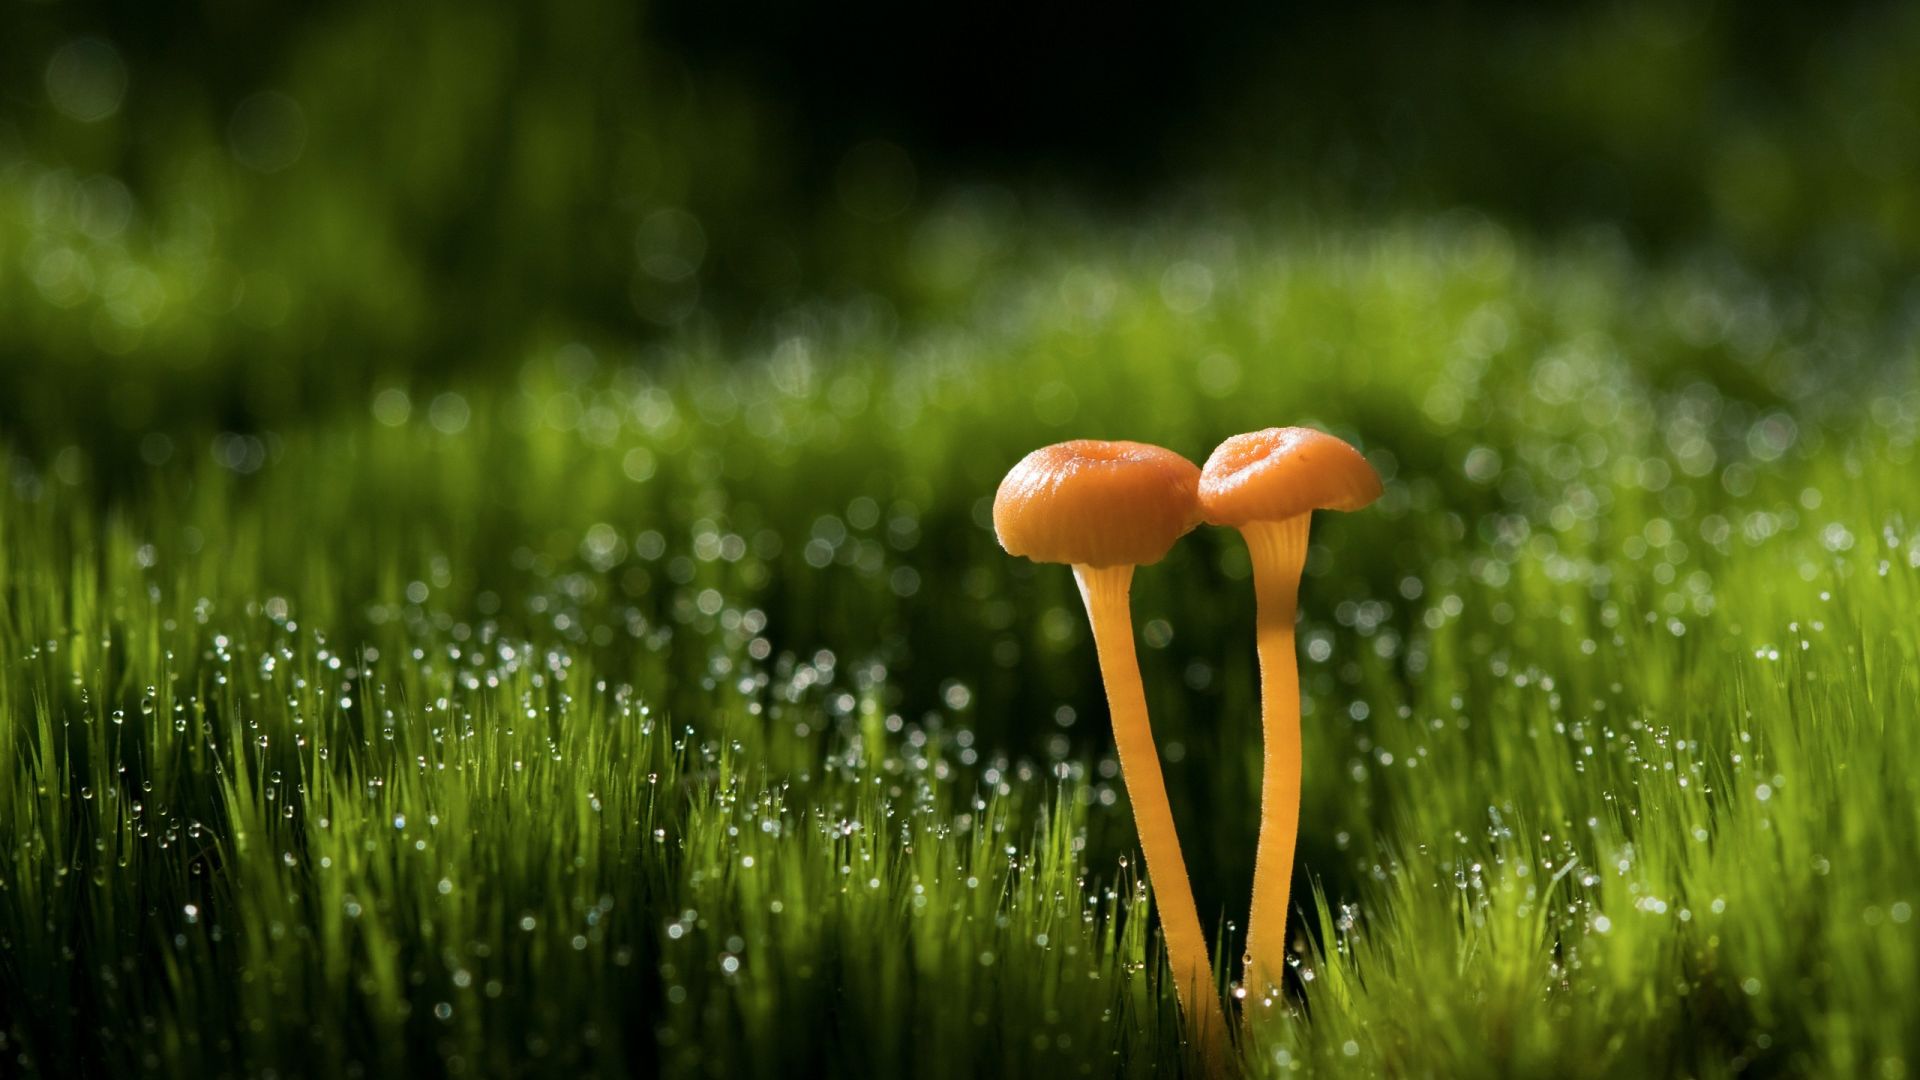 Desktop Wallpaper Mushroom In Grass Field, Hd Image, Picture, Background,  Pybwdx